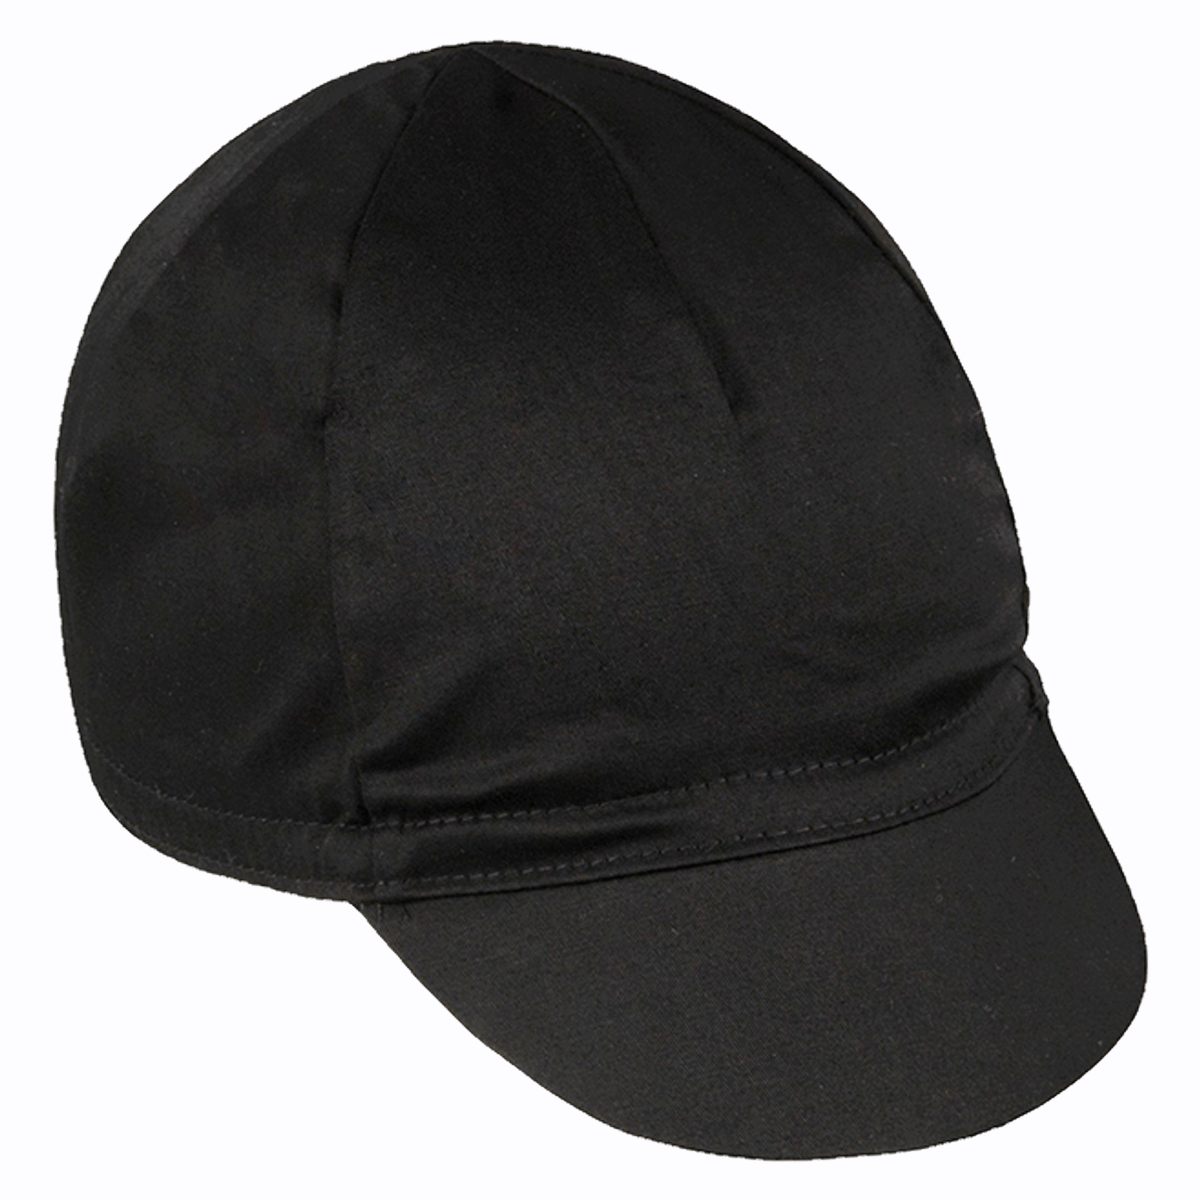 Cap - Black - One-size